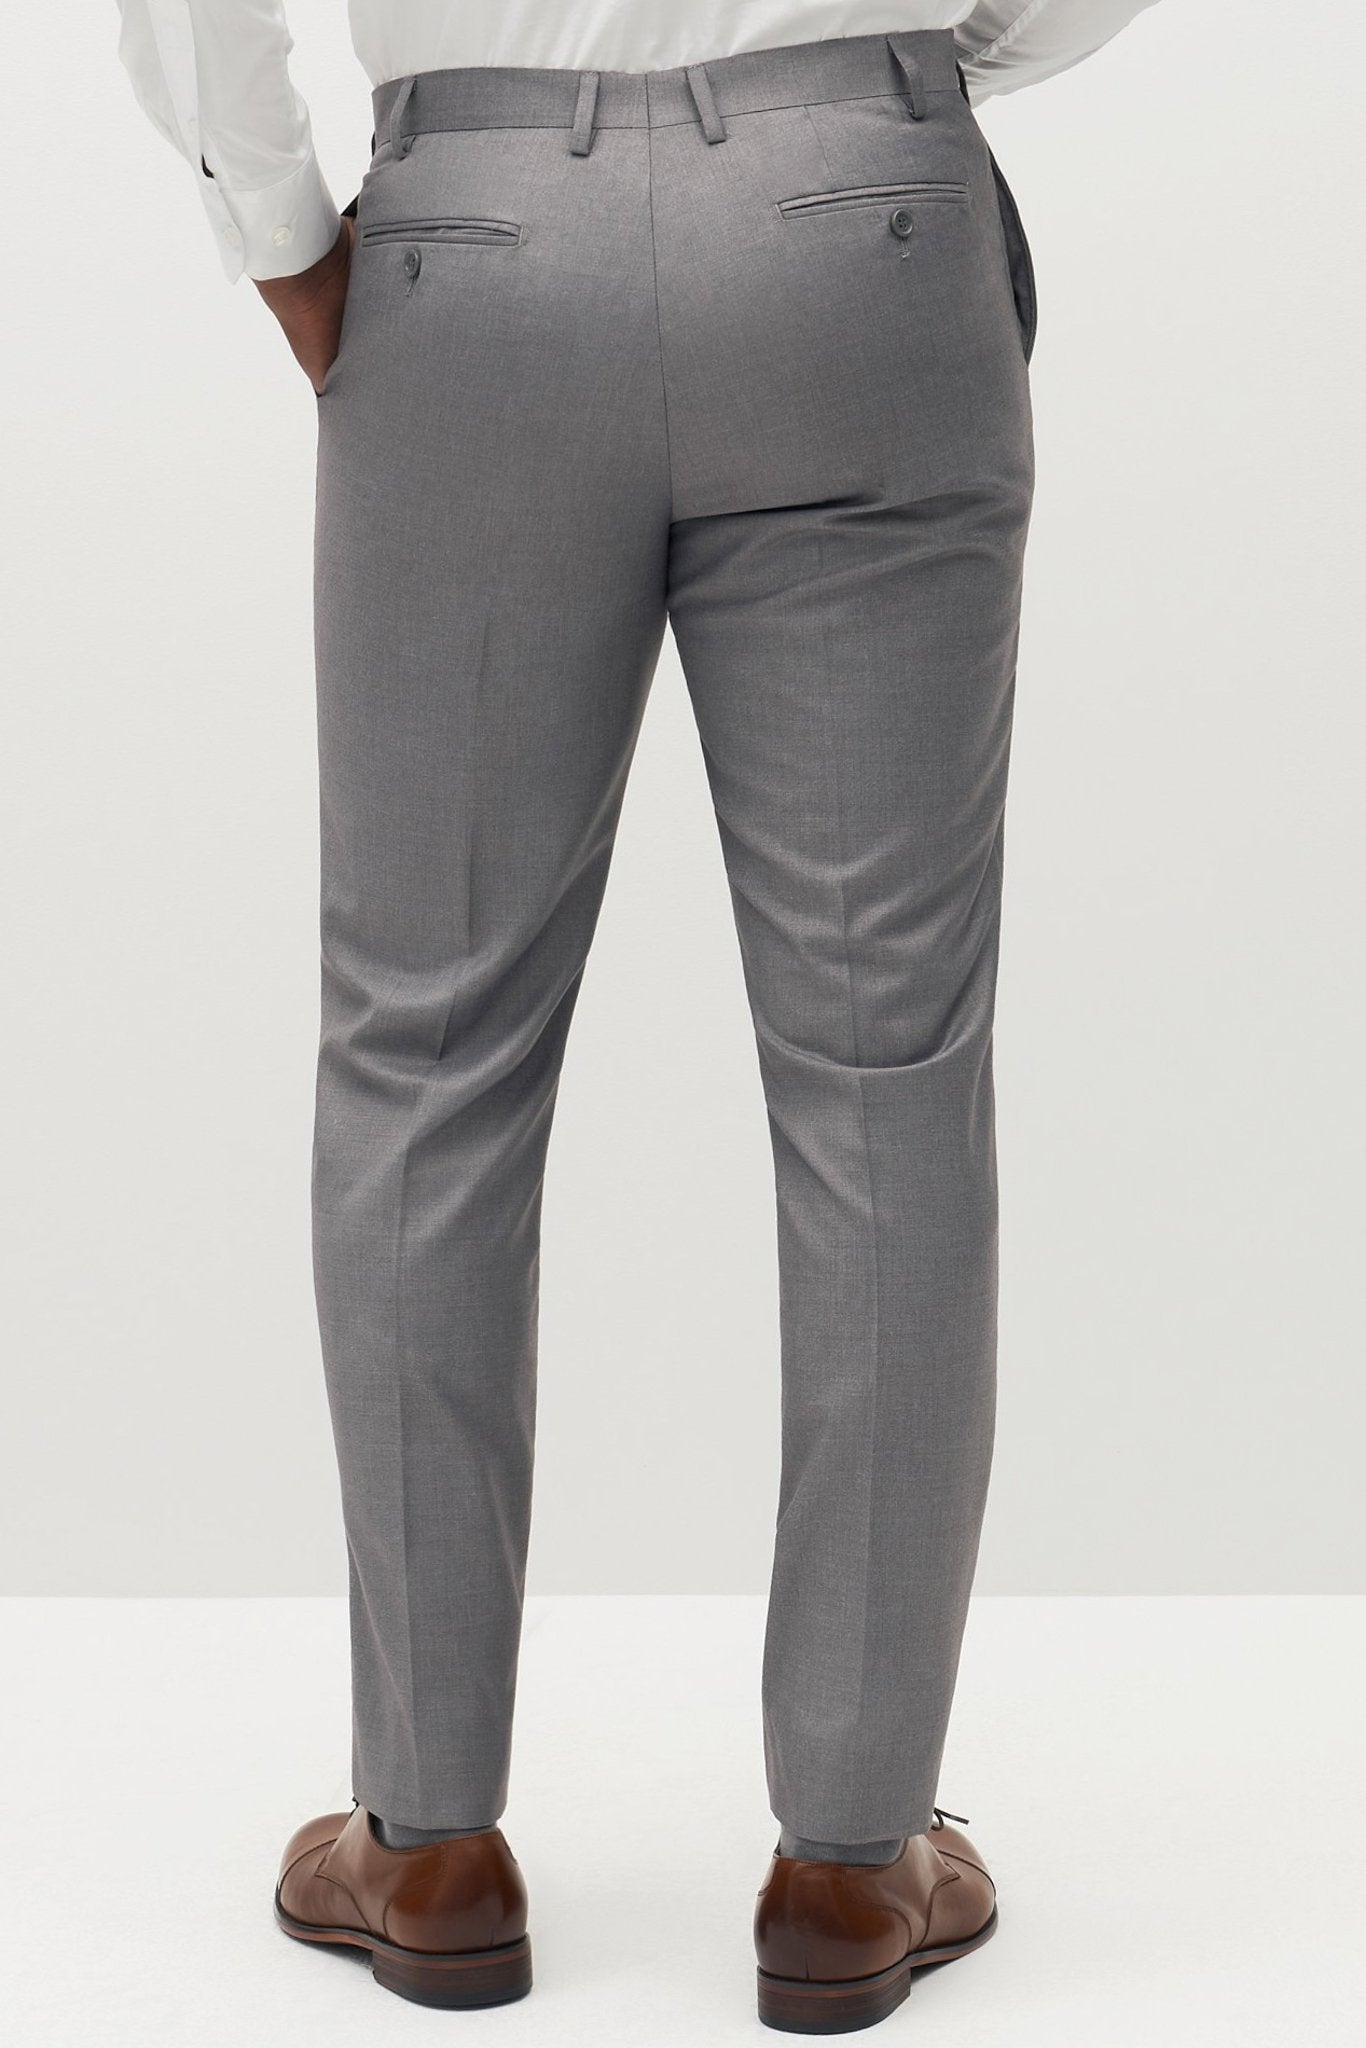 Textured Gray Groomsmen Suit by SuitShop, back view